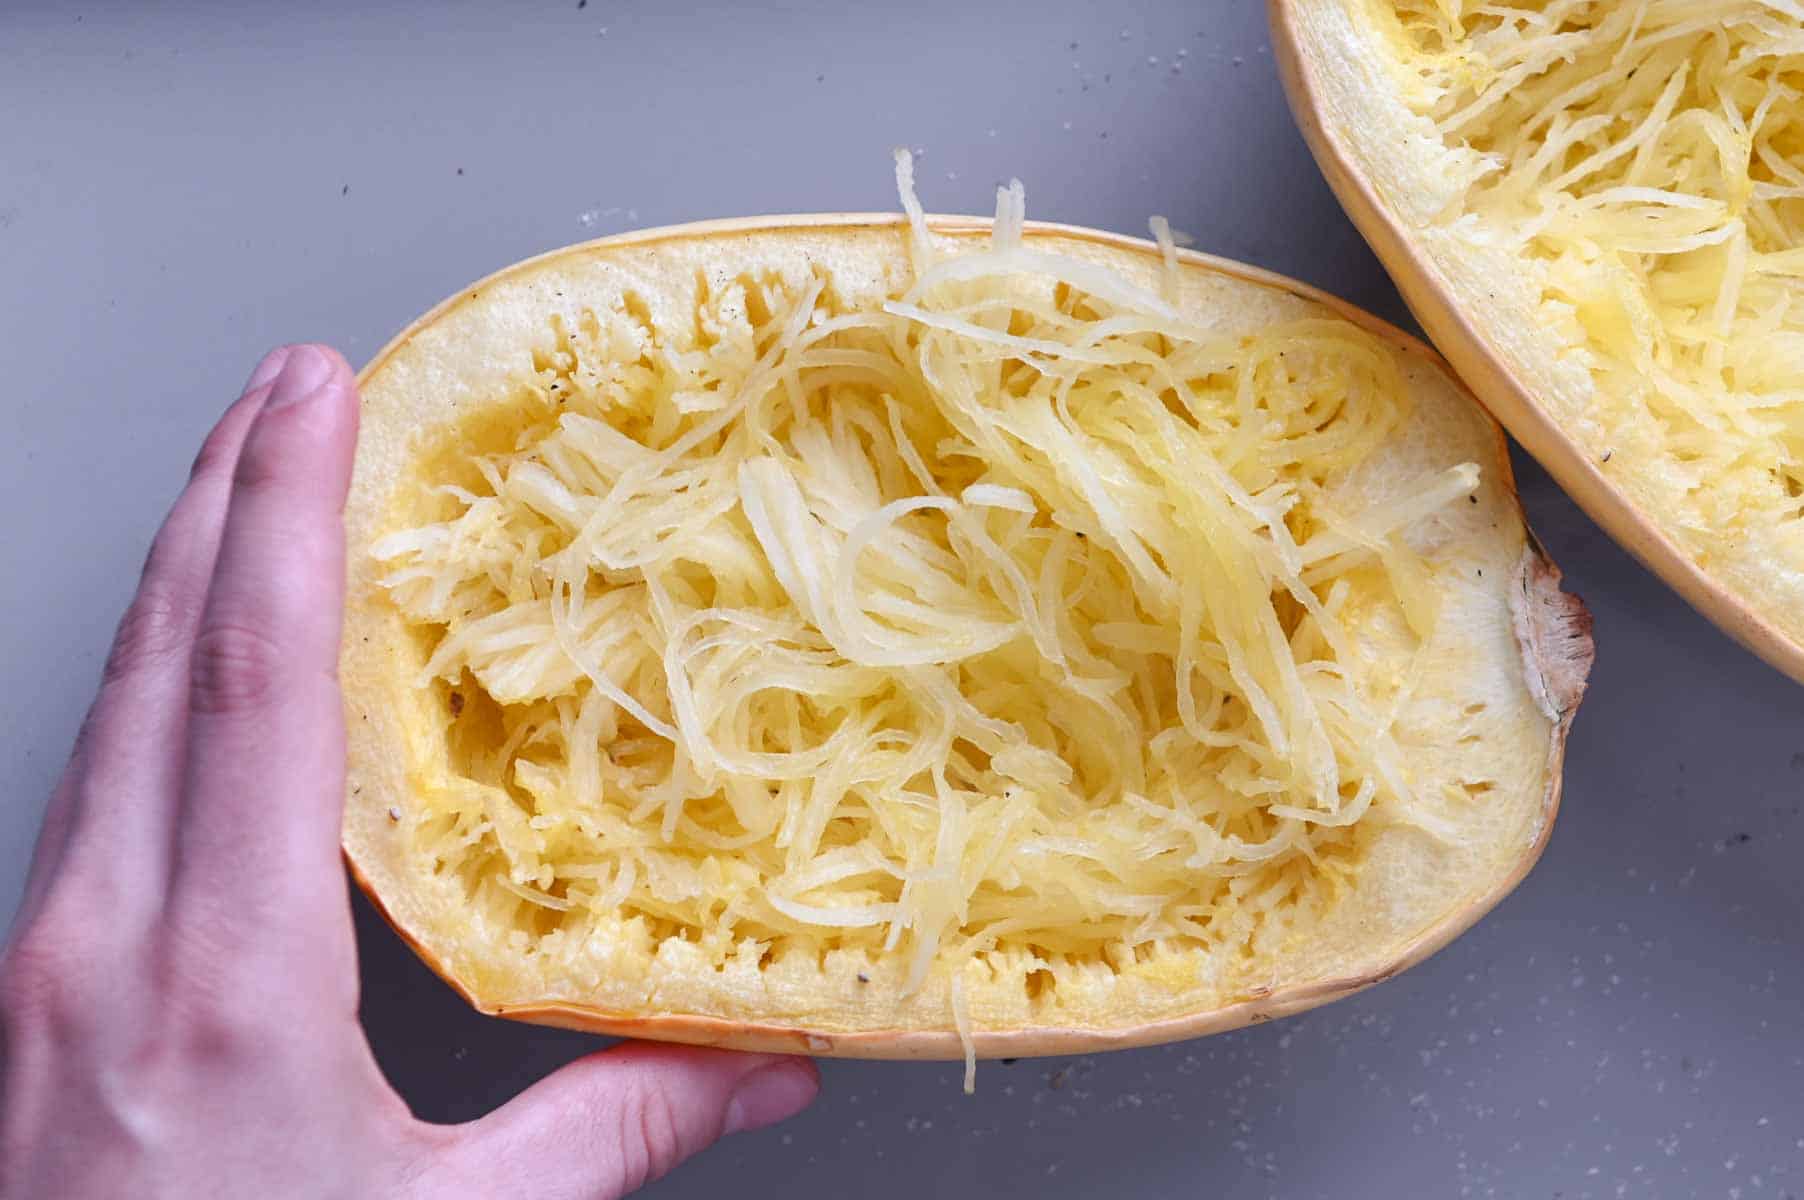 Hand grasping half of a spaghetti squash showing the shreds of squash.